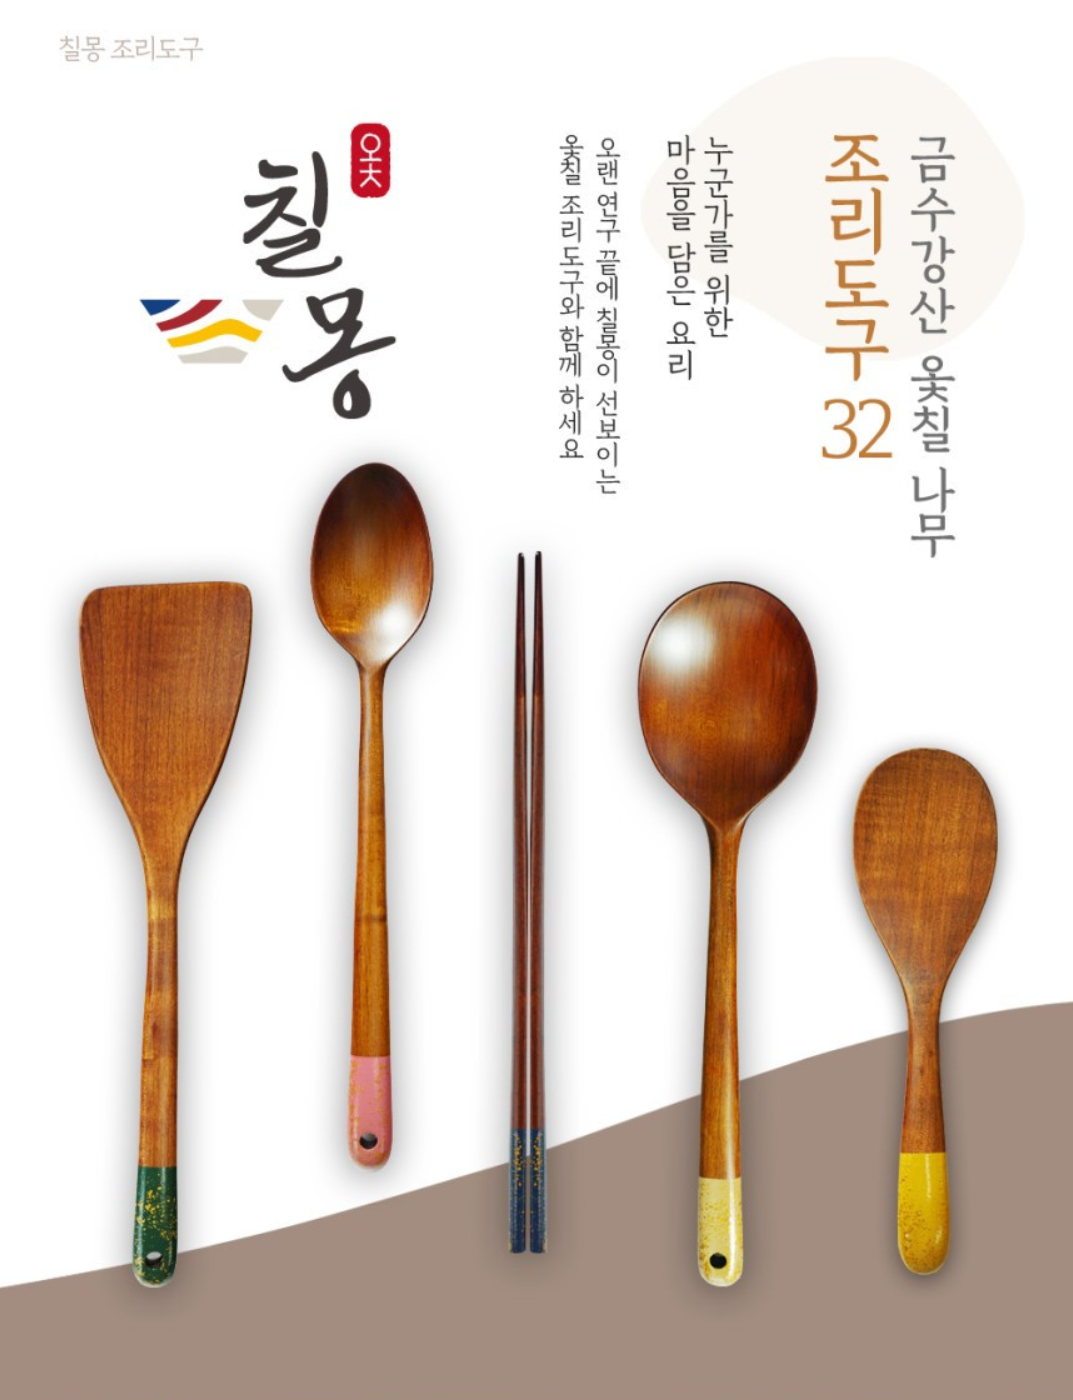 Chilmong] Korean Ottchil Kitchen Tools Set (5 Pcs)